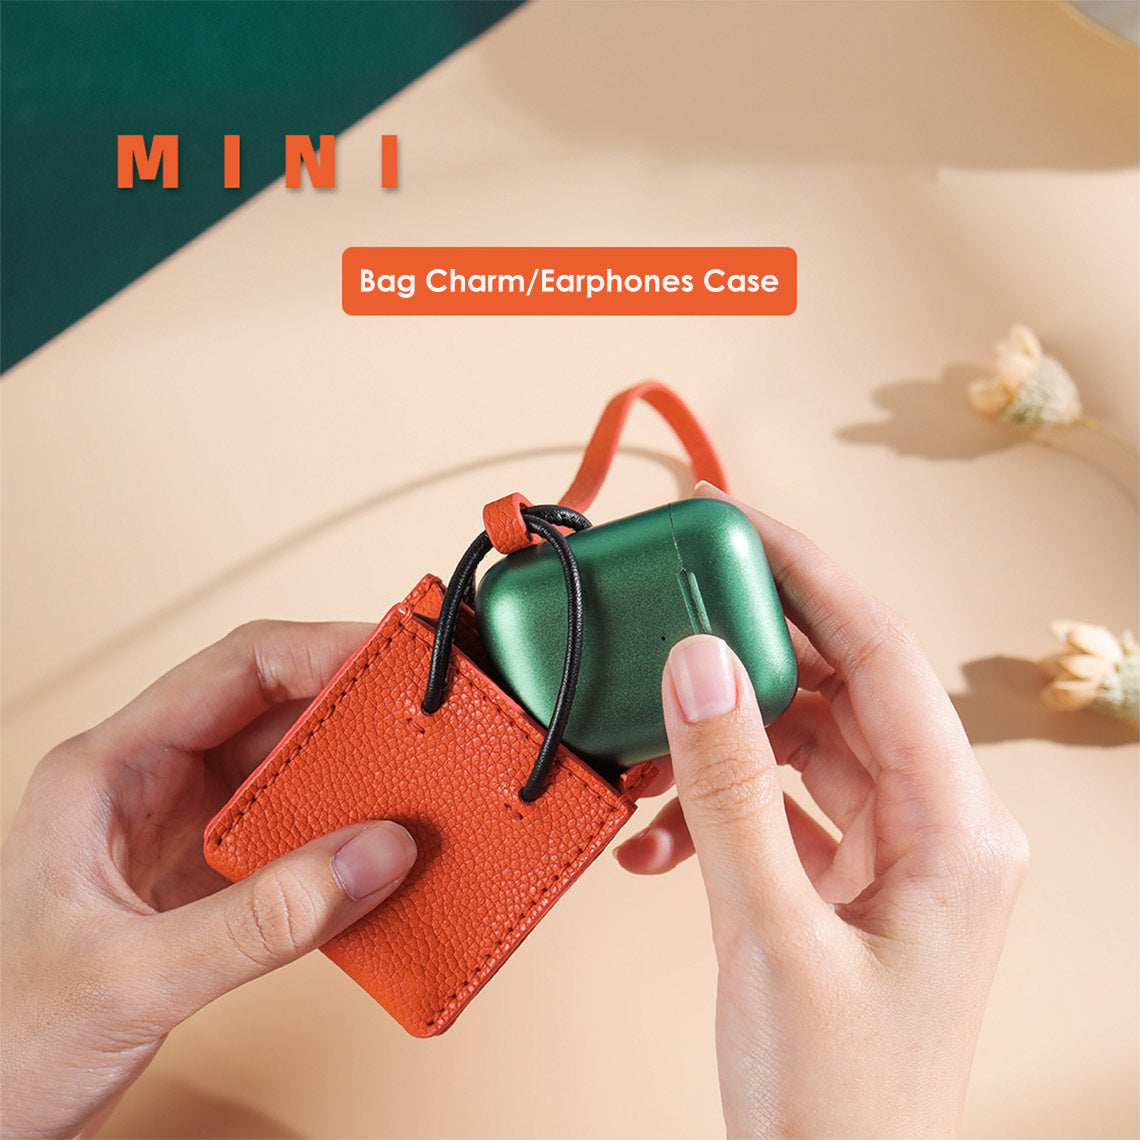 DIY orange leather bag charm kit | Handmade purse charm, Airpods holder/earphones protective case